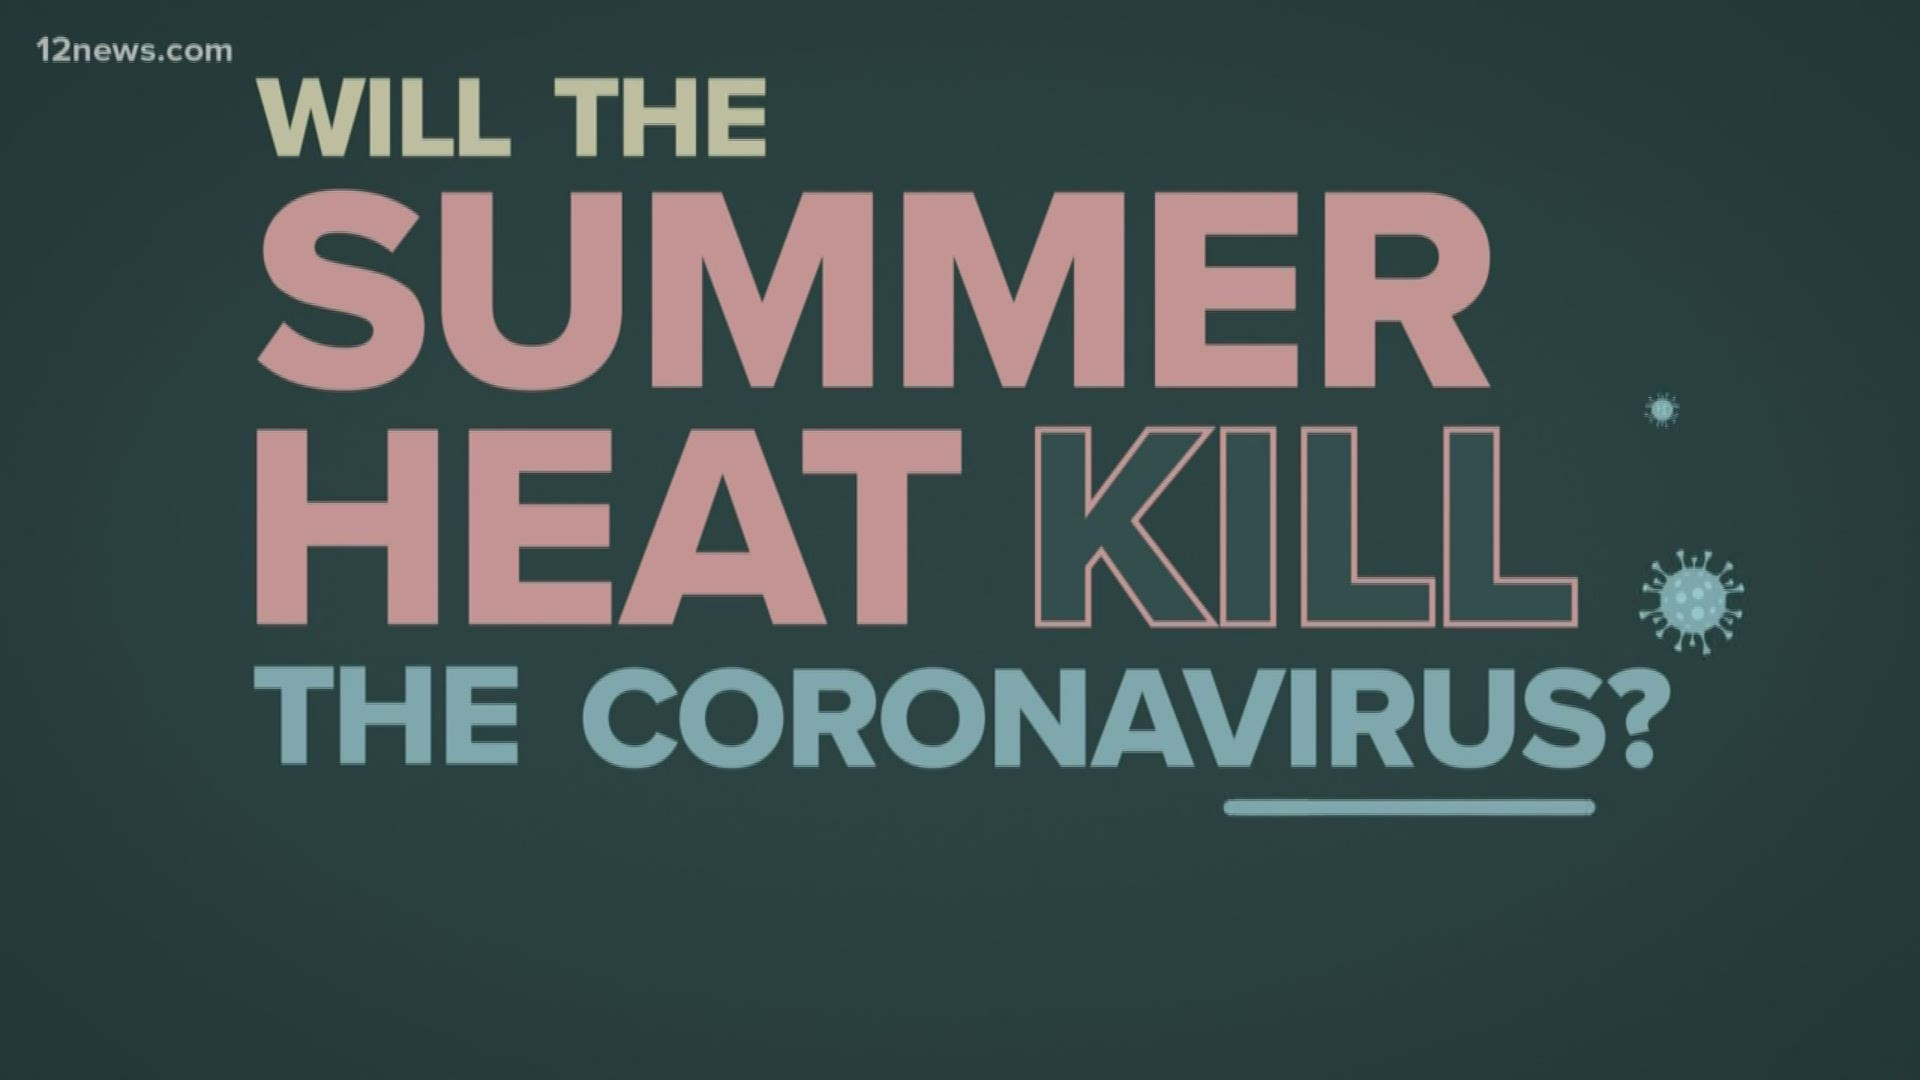 Will the summer heat kill the coronavirus? Tram Mai has the answer.